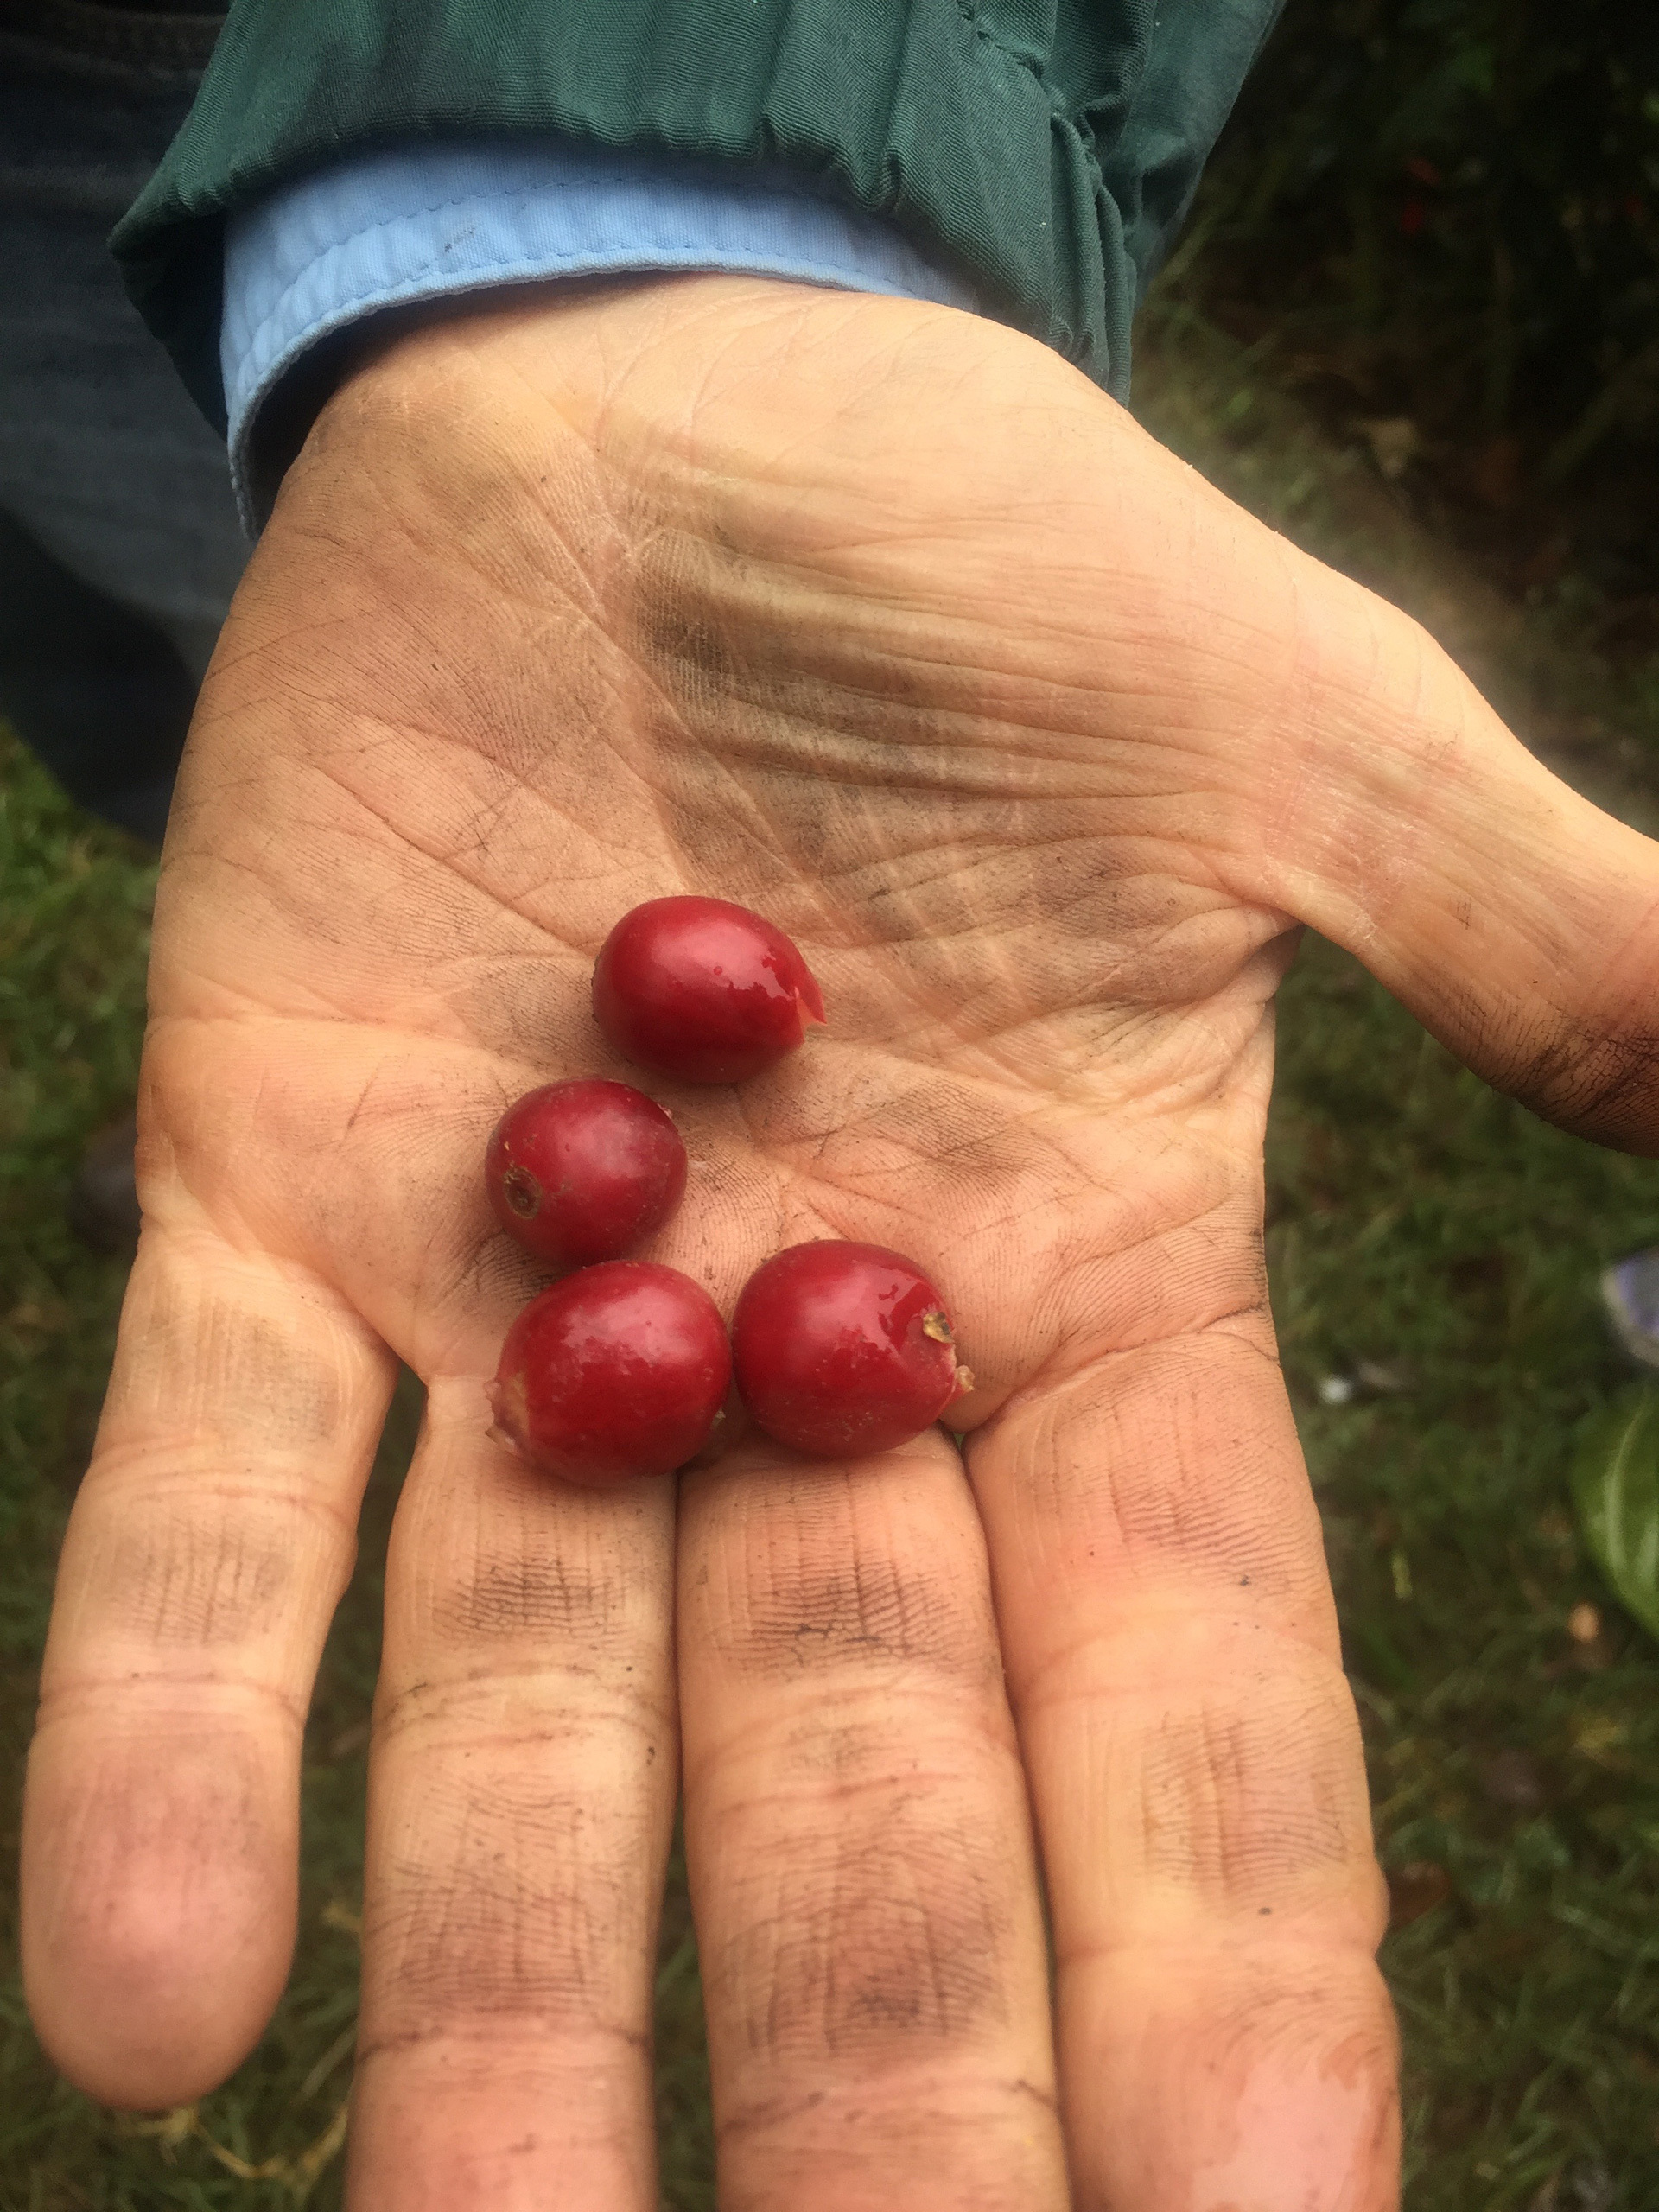 Just-picked coffee cherries